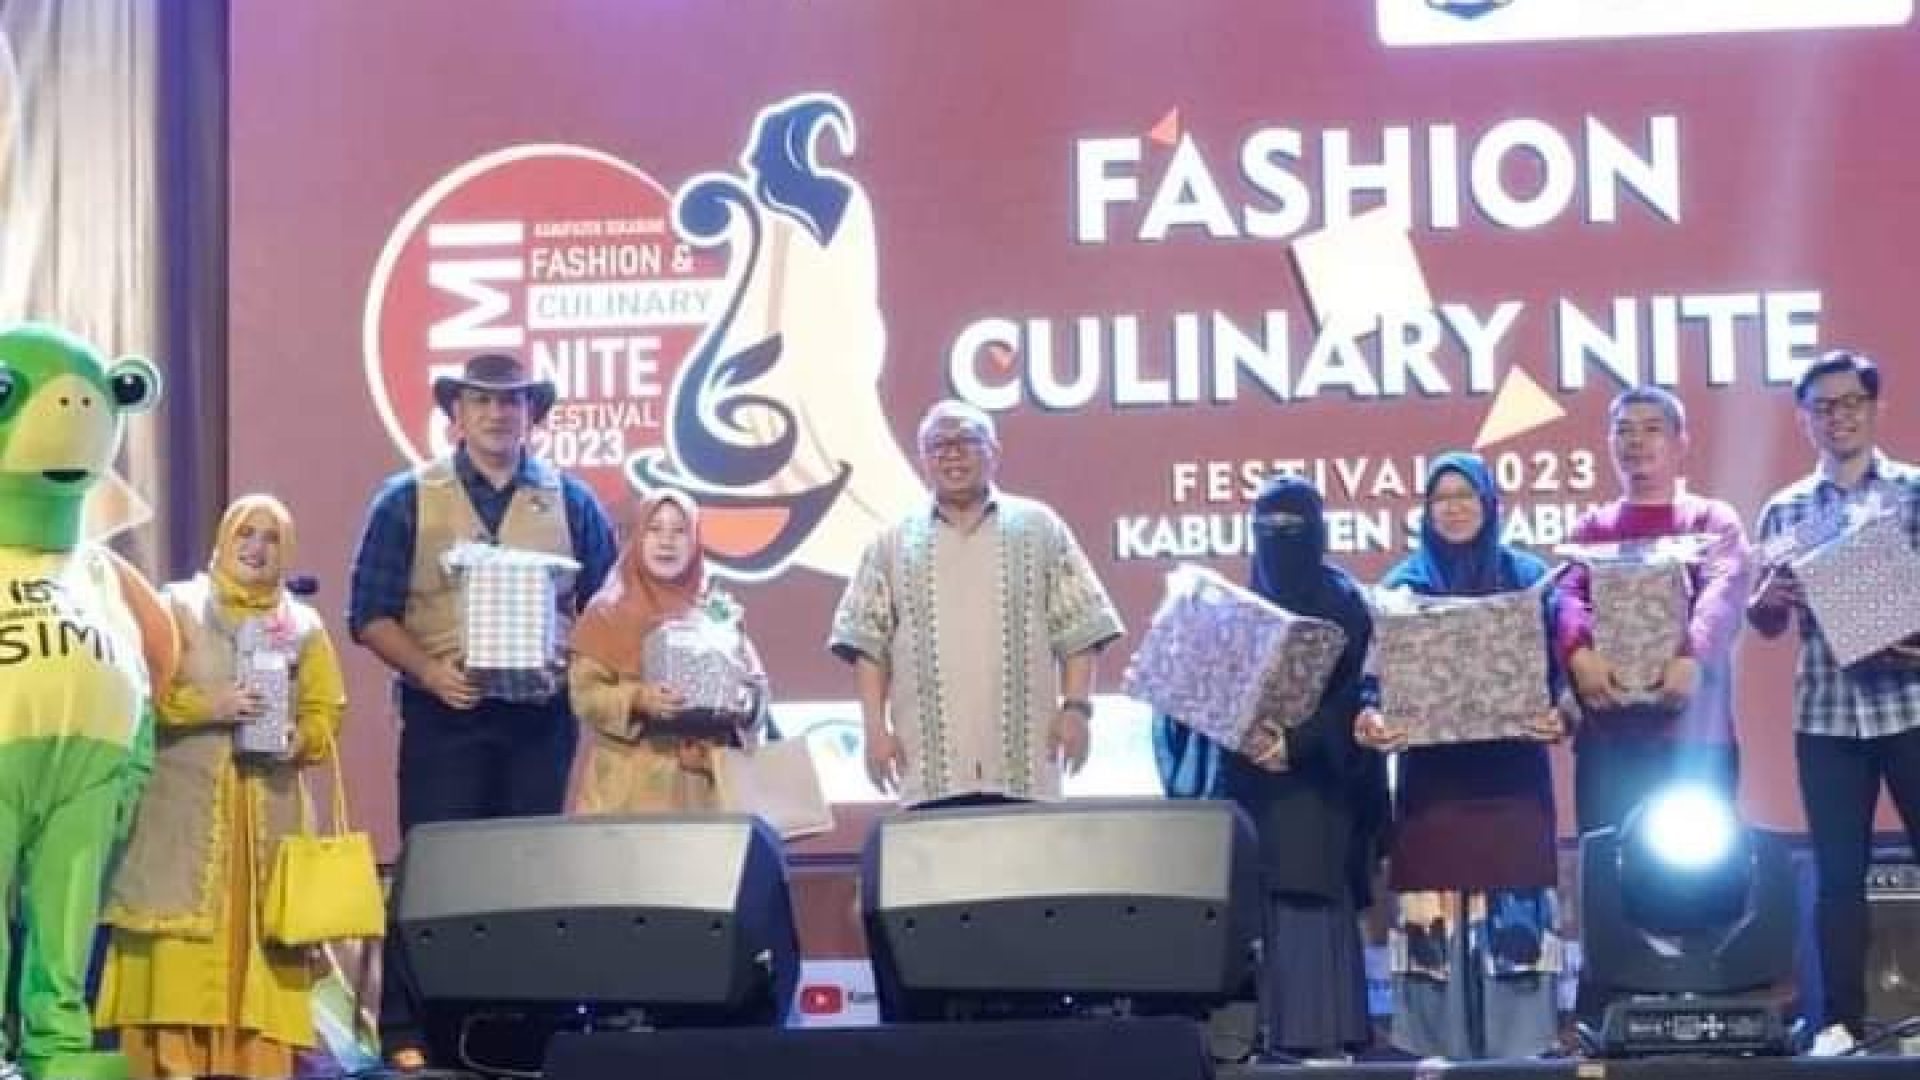 HADIAH: Plt Kadiskominfo Kabupaten Sukabumi  Herdy Somantri (tiga kiri) mendapat hadiah Simi Fashion & Culinary Nite Festival kategori fashion. (Dwika/Mediaseruni)